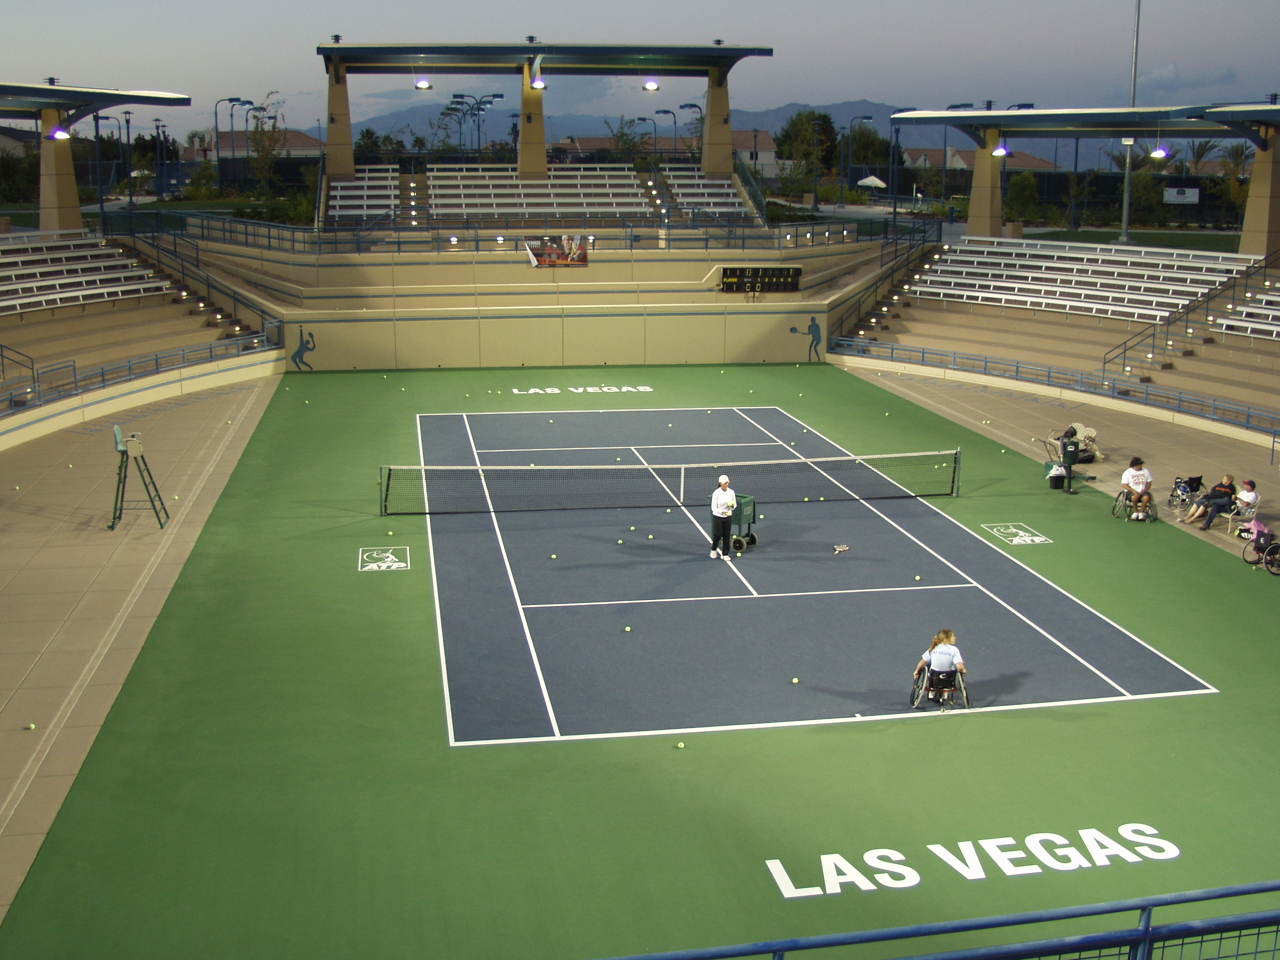 Теннис стадион. Корт теннис стадион. Место о большом теннисе. Теннис в Вегасе.